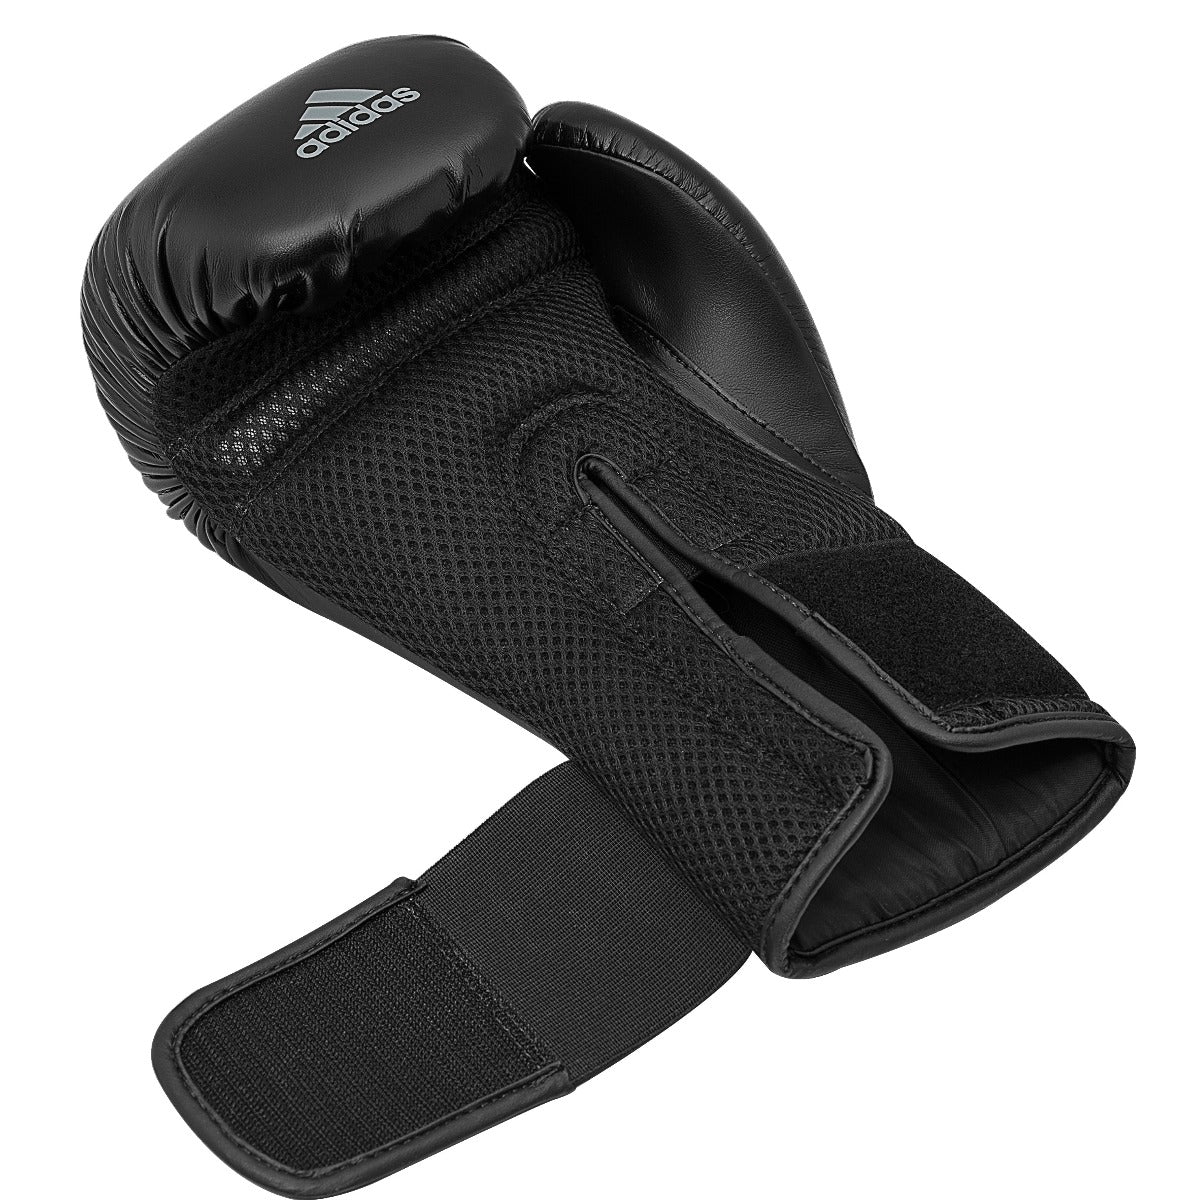 Gants de Boxe Adidas Speed 150 - Noir/Gris